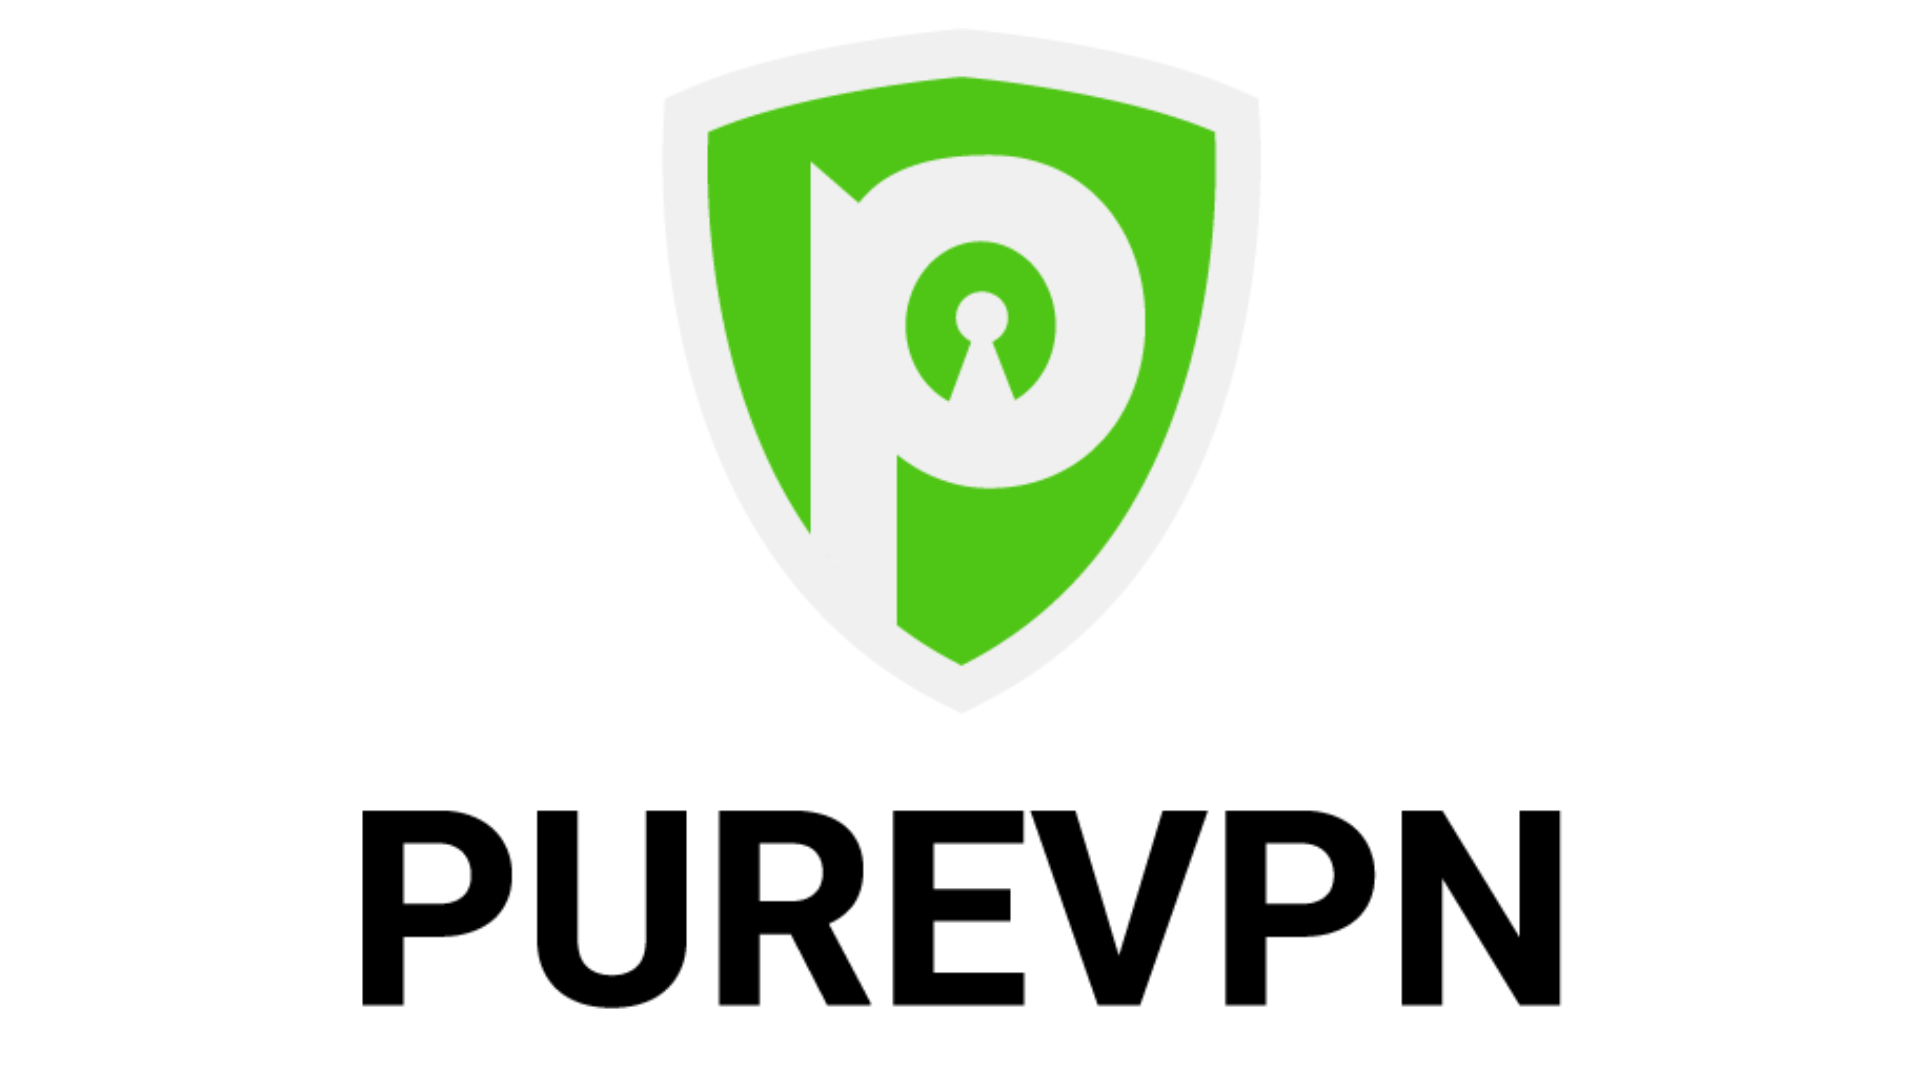 Best Firefox VPN: PureVPN. Image shows the company logo.